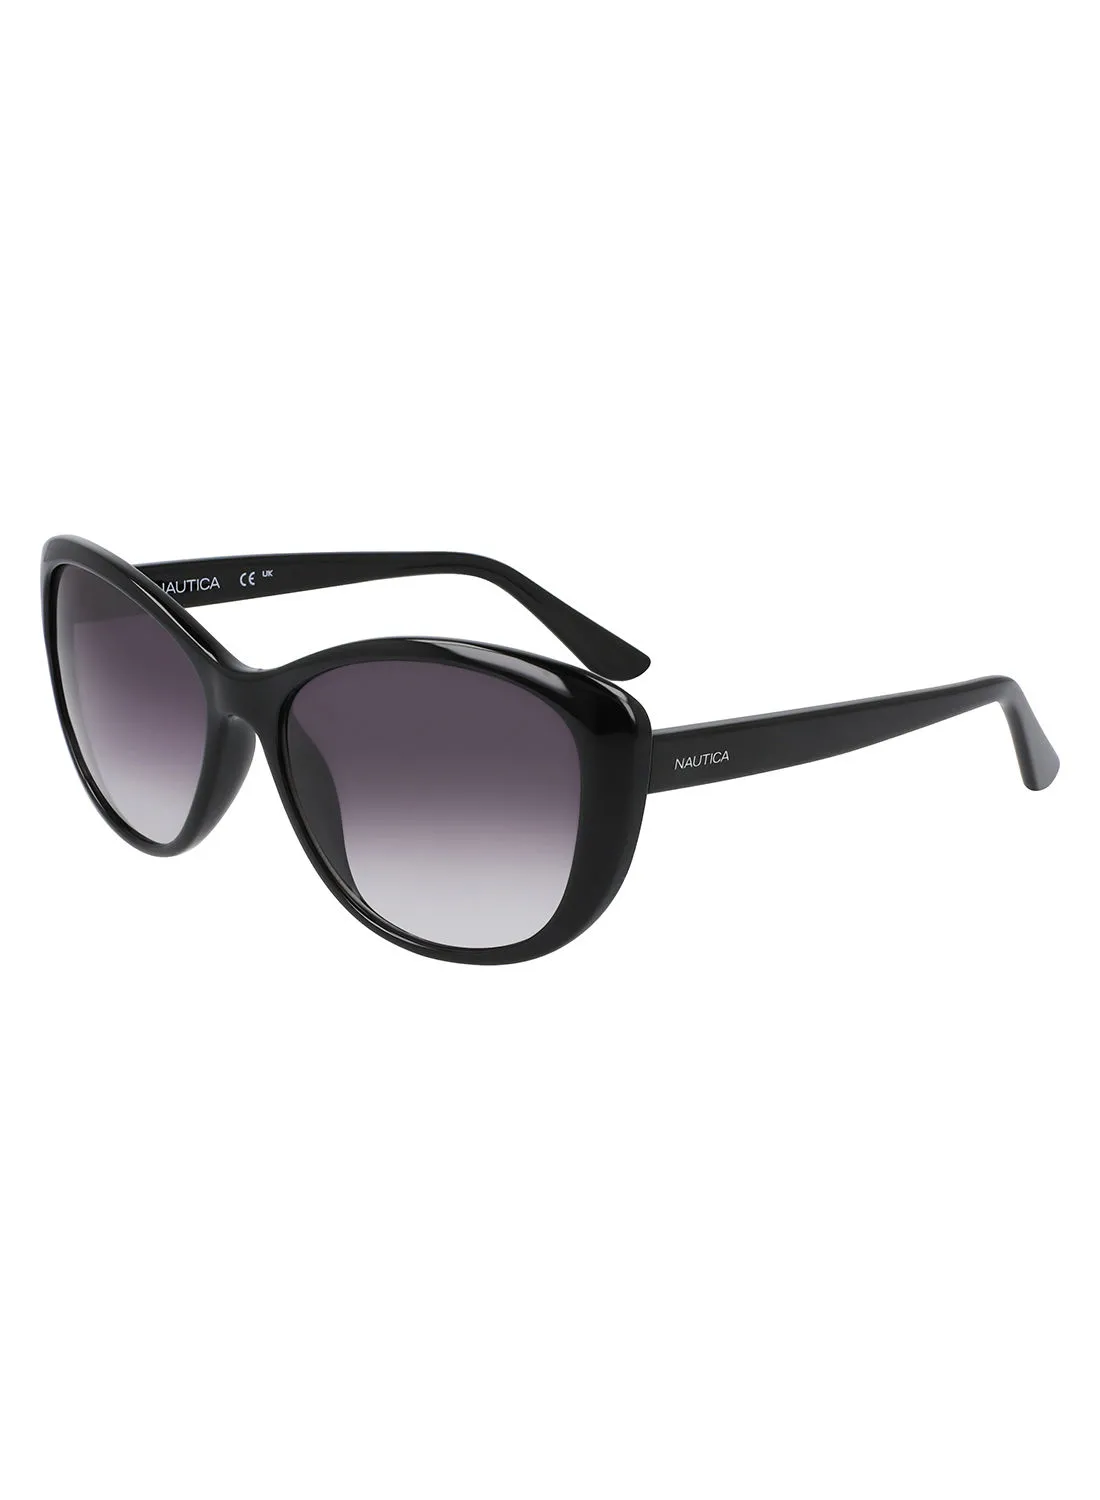 NAUTICA Women's Oval Sunglasses - N2242S-001-5716 - Lens Size: 57 Mm